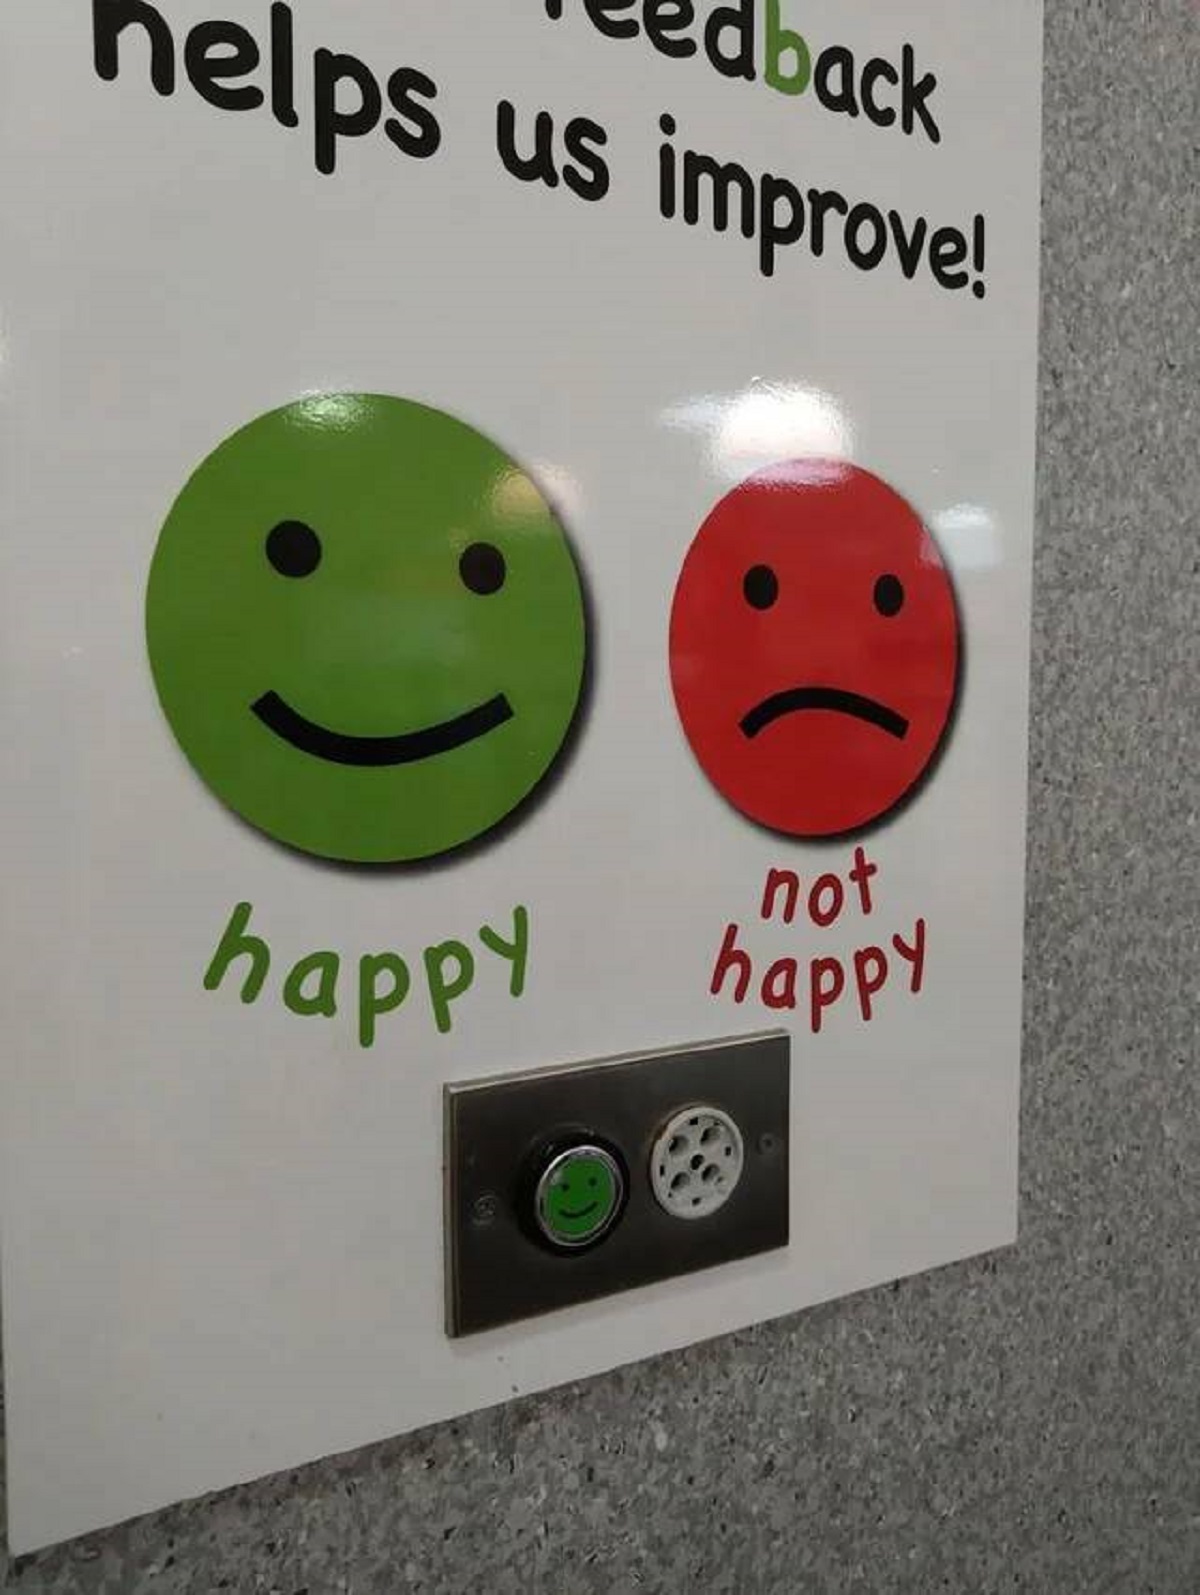 smile - helps back us improve! 8 not happy happy